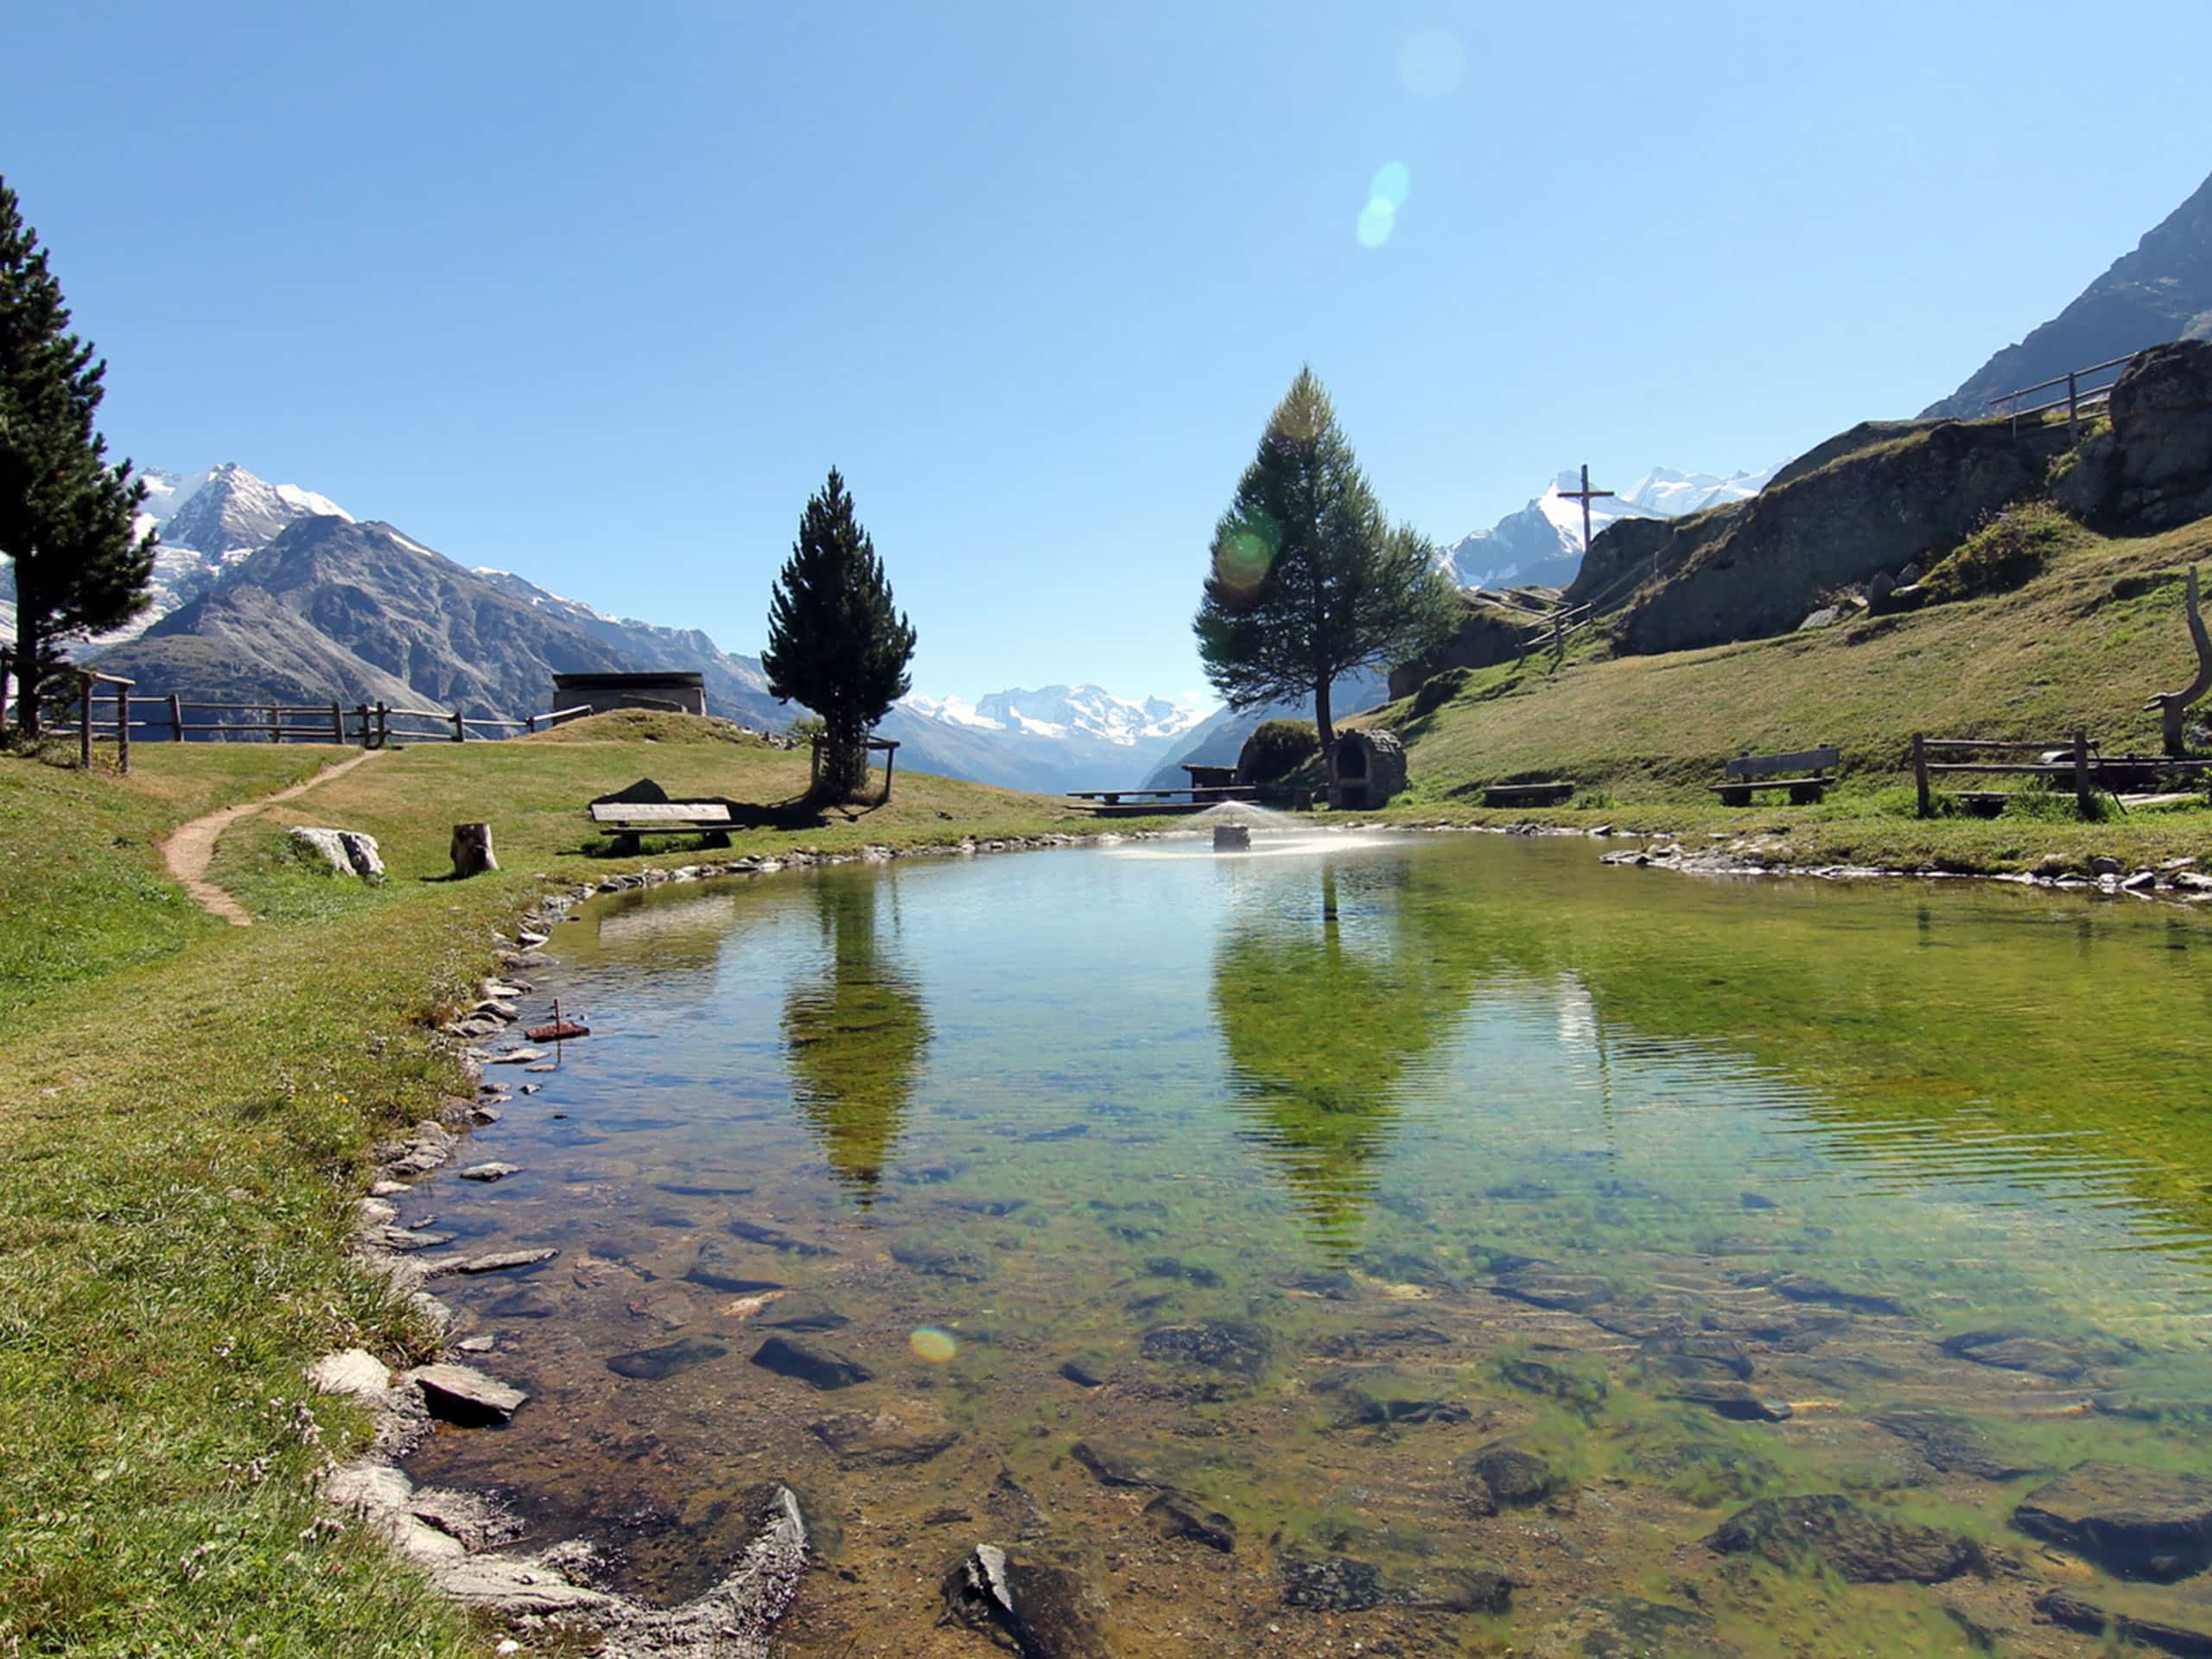 The Walker’s Haute Route to Zermatt stretches 213km